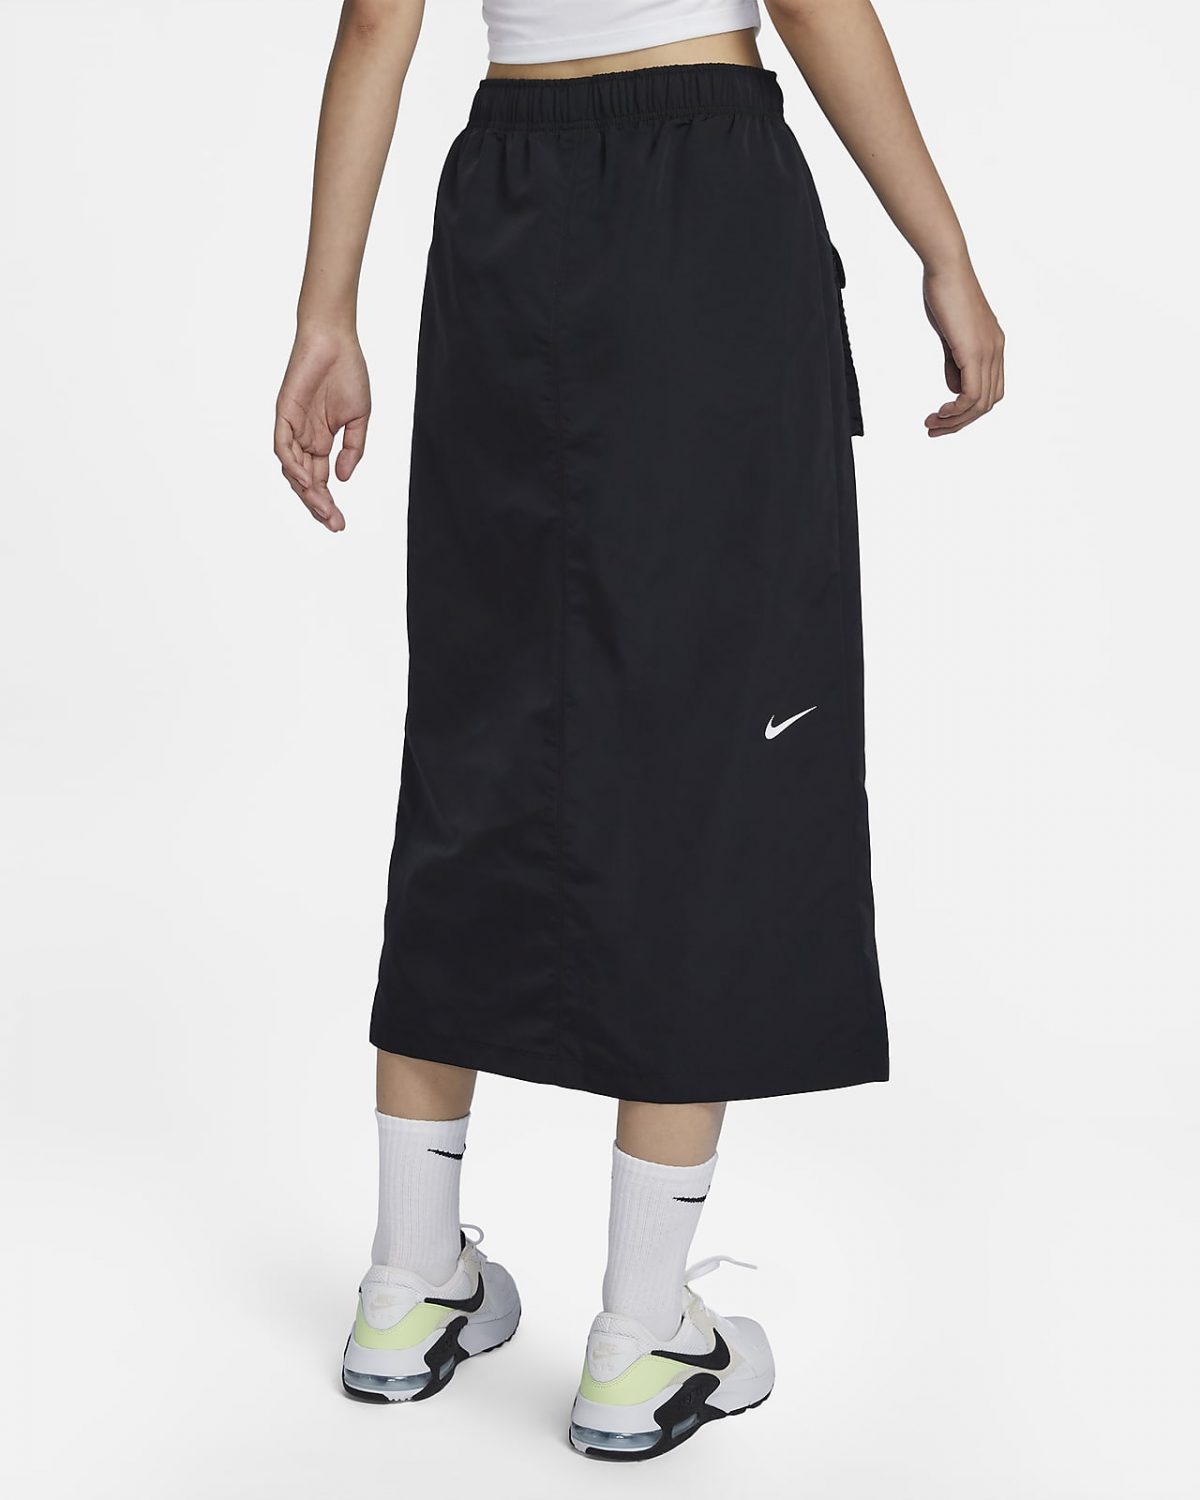 Женская юбка Nike Sportswear фотография